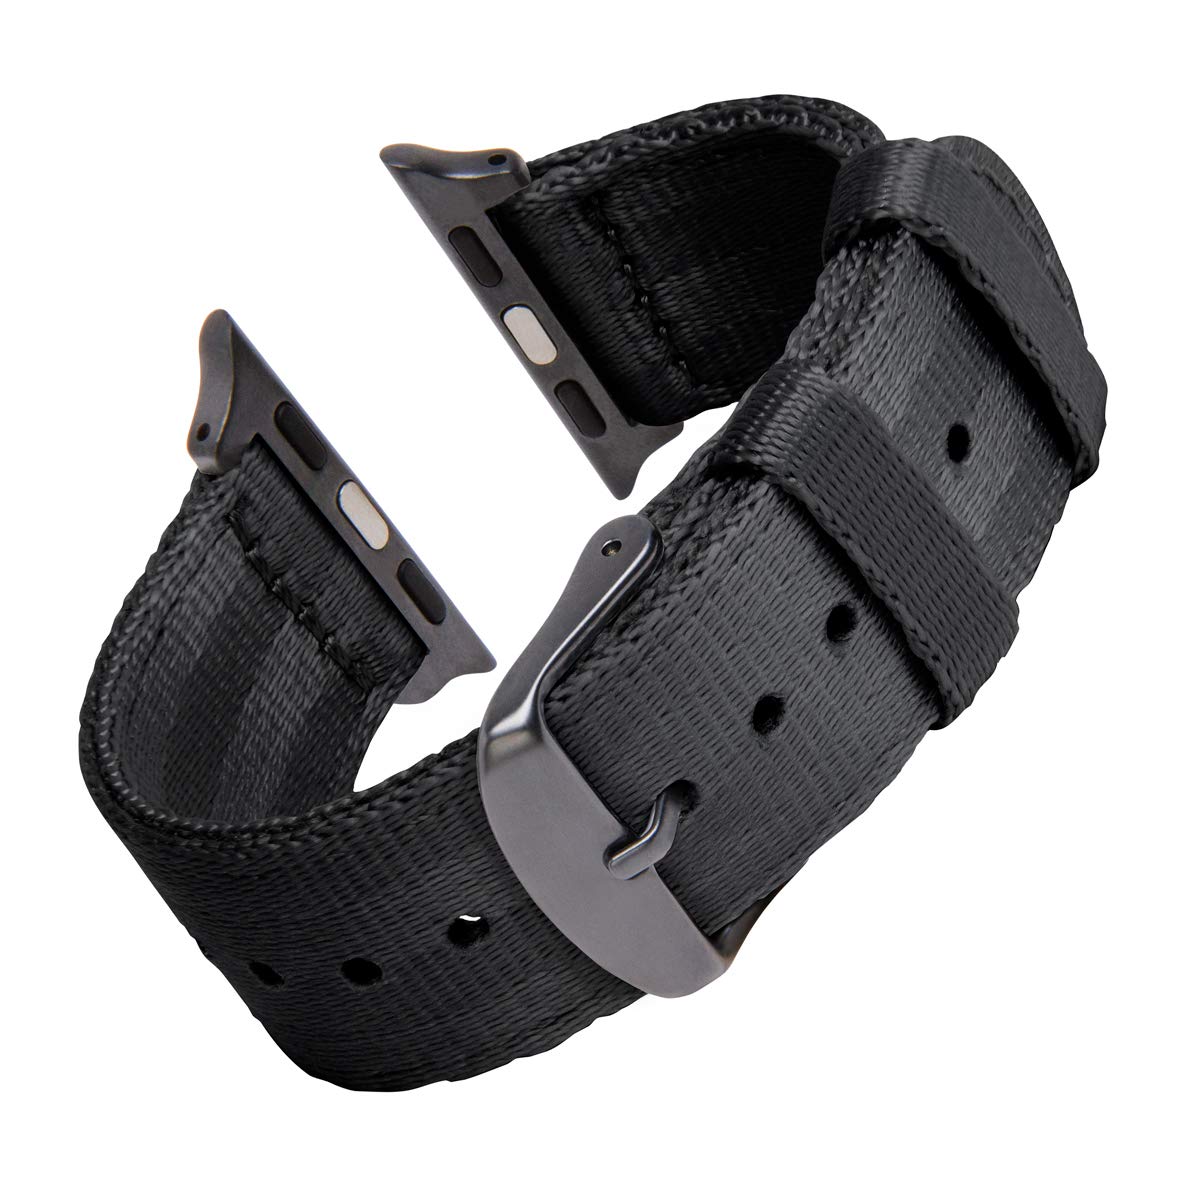 Archer Watch Straps - Seat Belt Nylon Watch Bands for Apple Watch